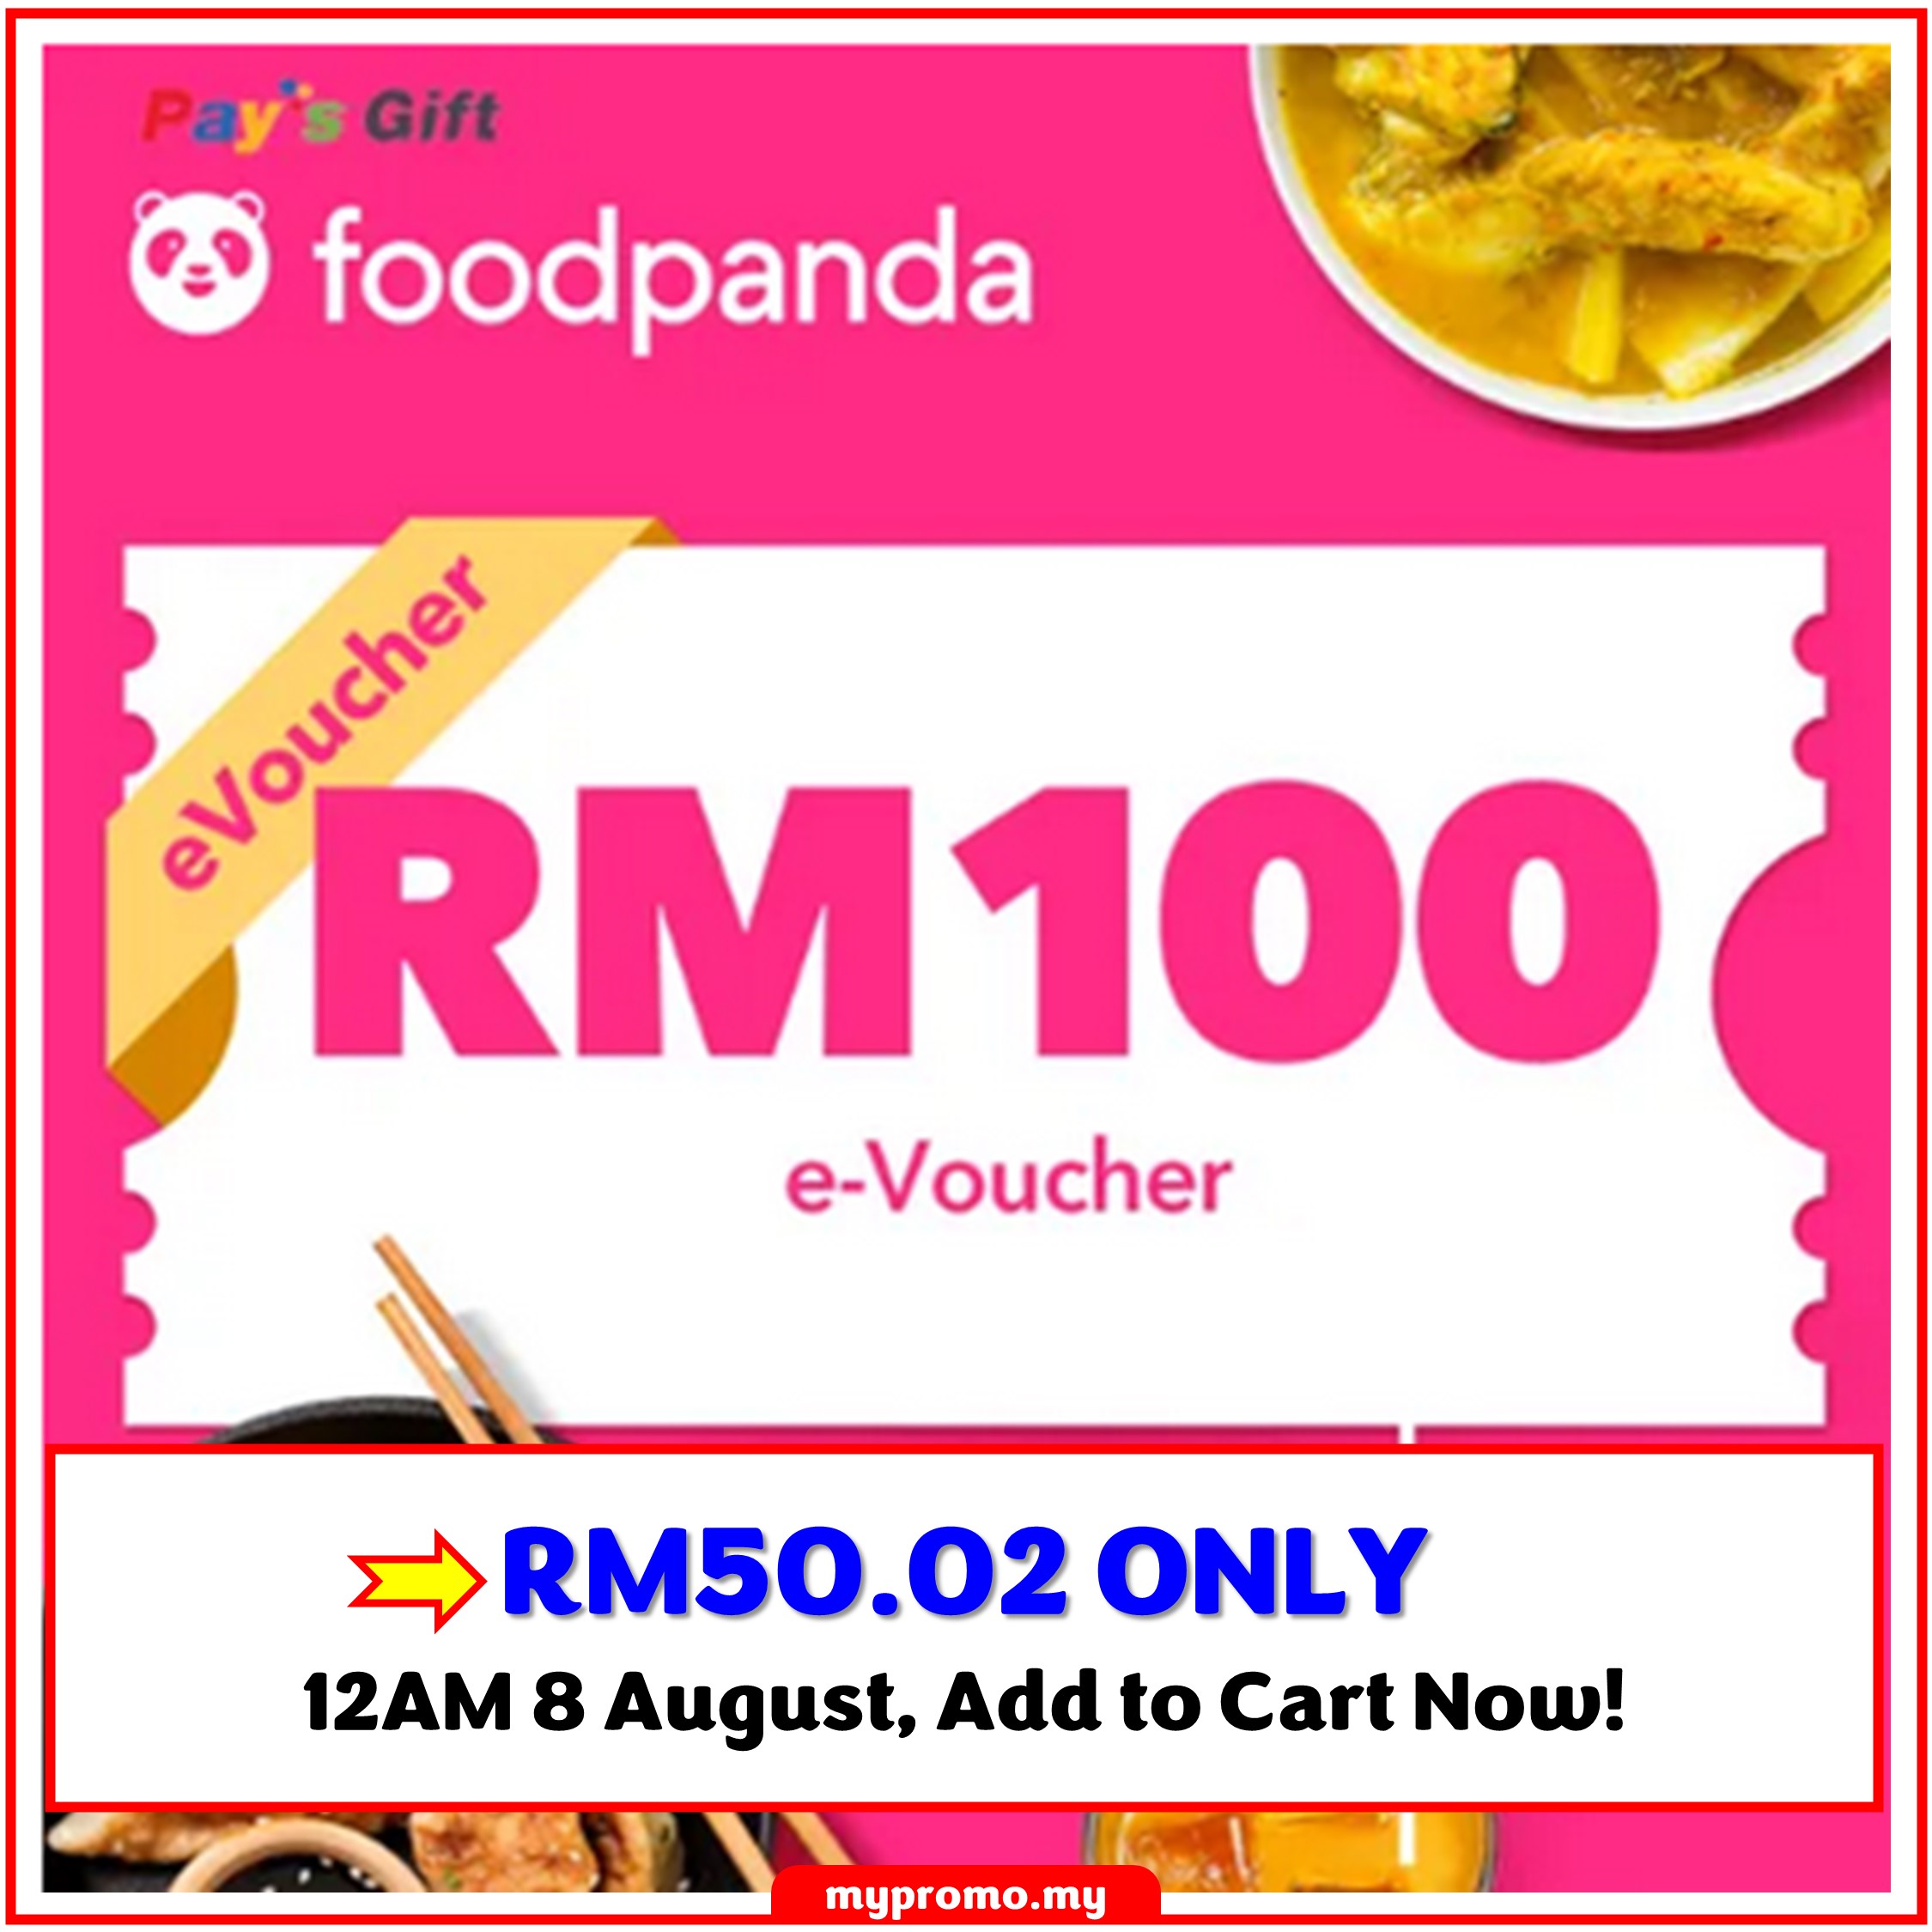 Lazada 8.8 - RM100 foodpanda evoucher for RM50